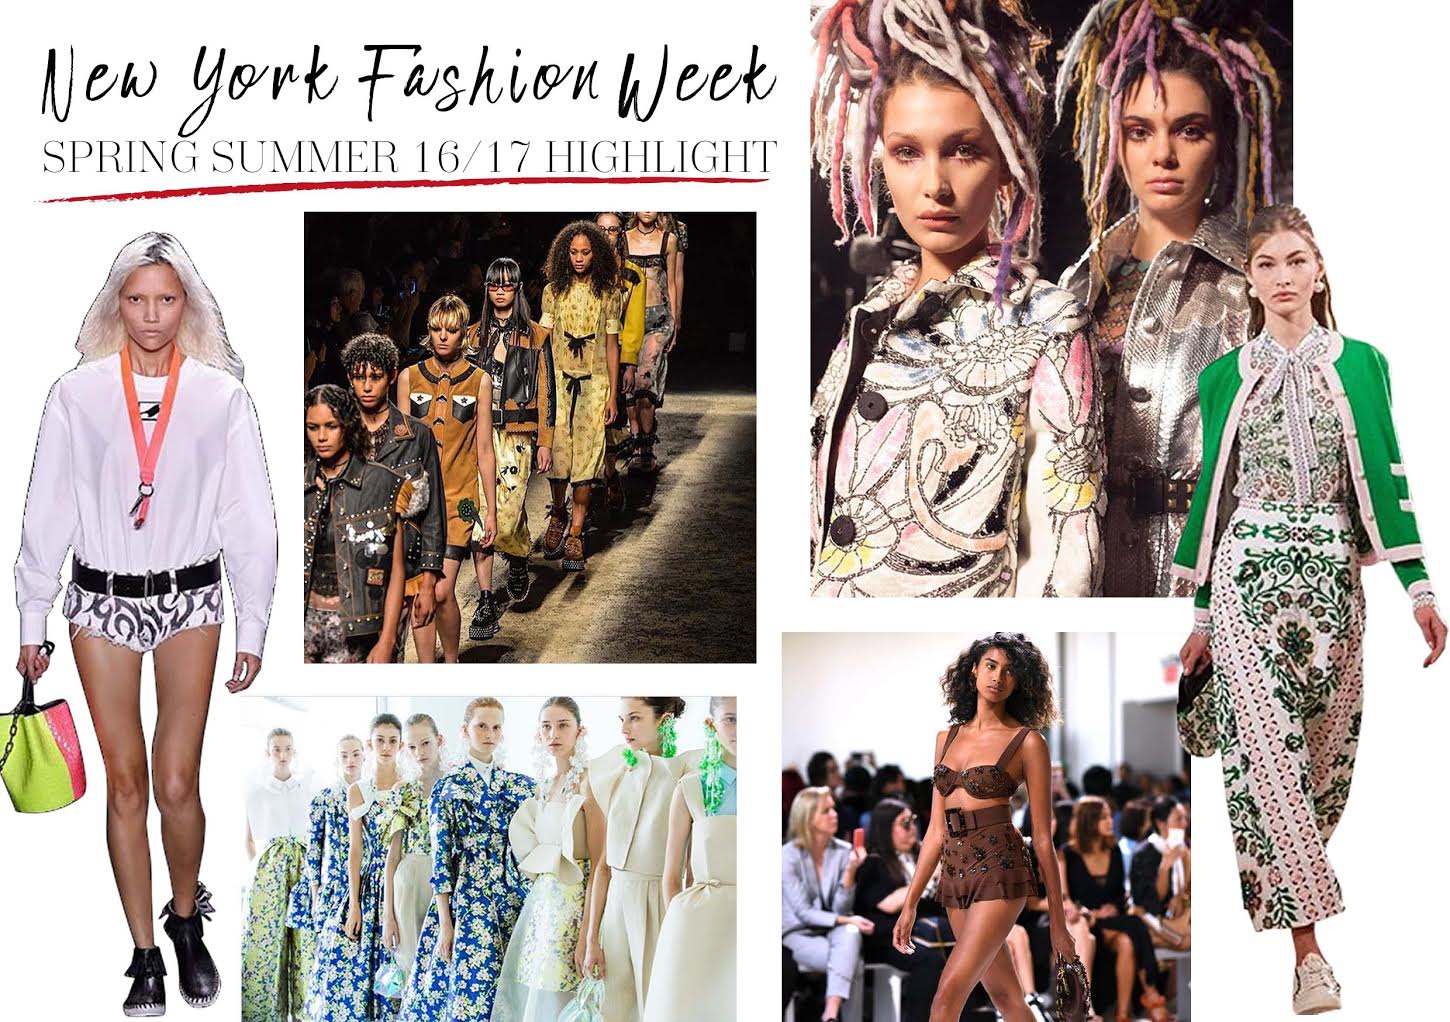 New York Fashion Week Spring/Summer 2017 Highlights